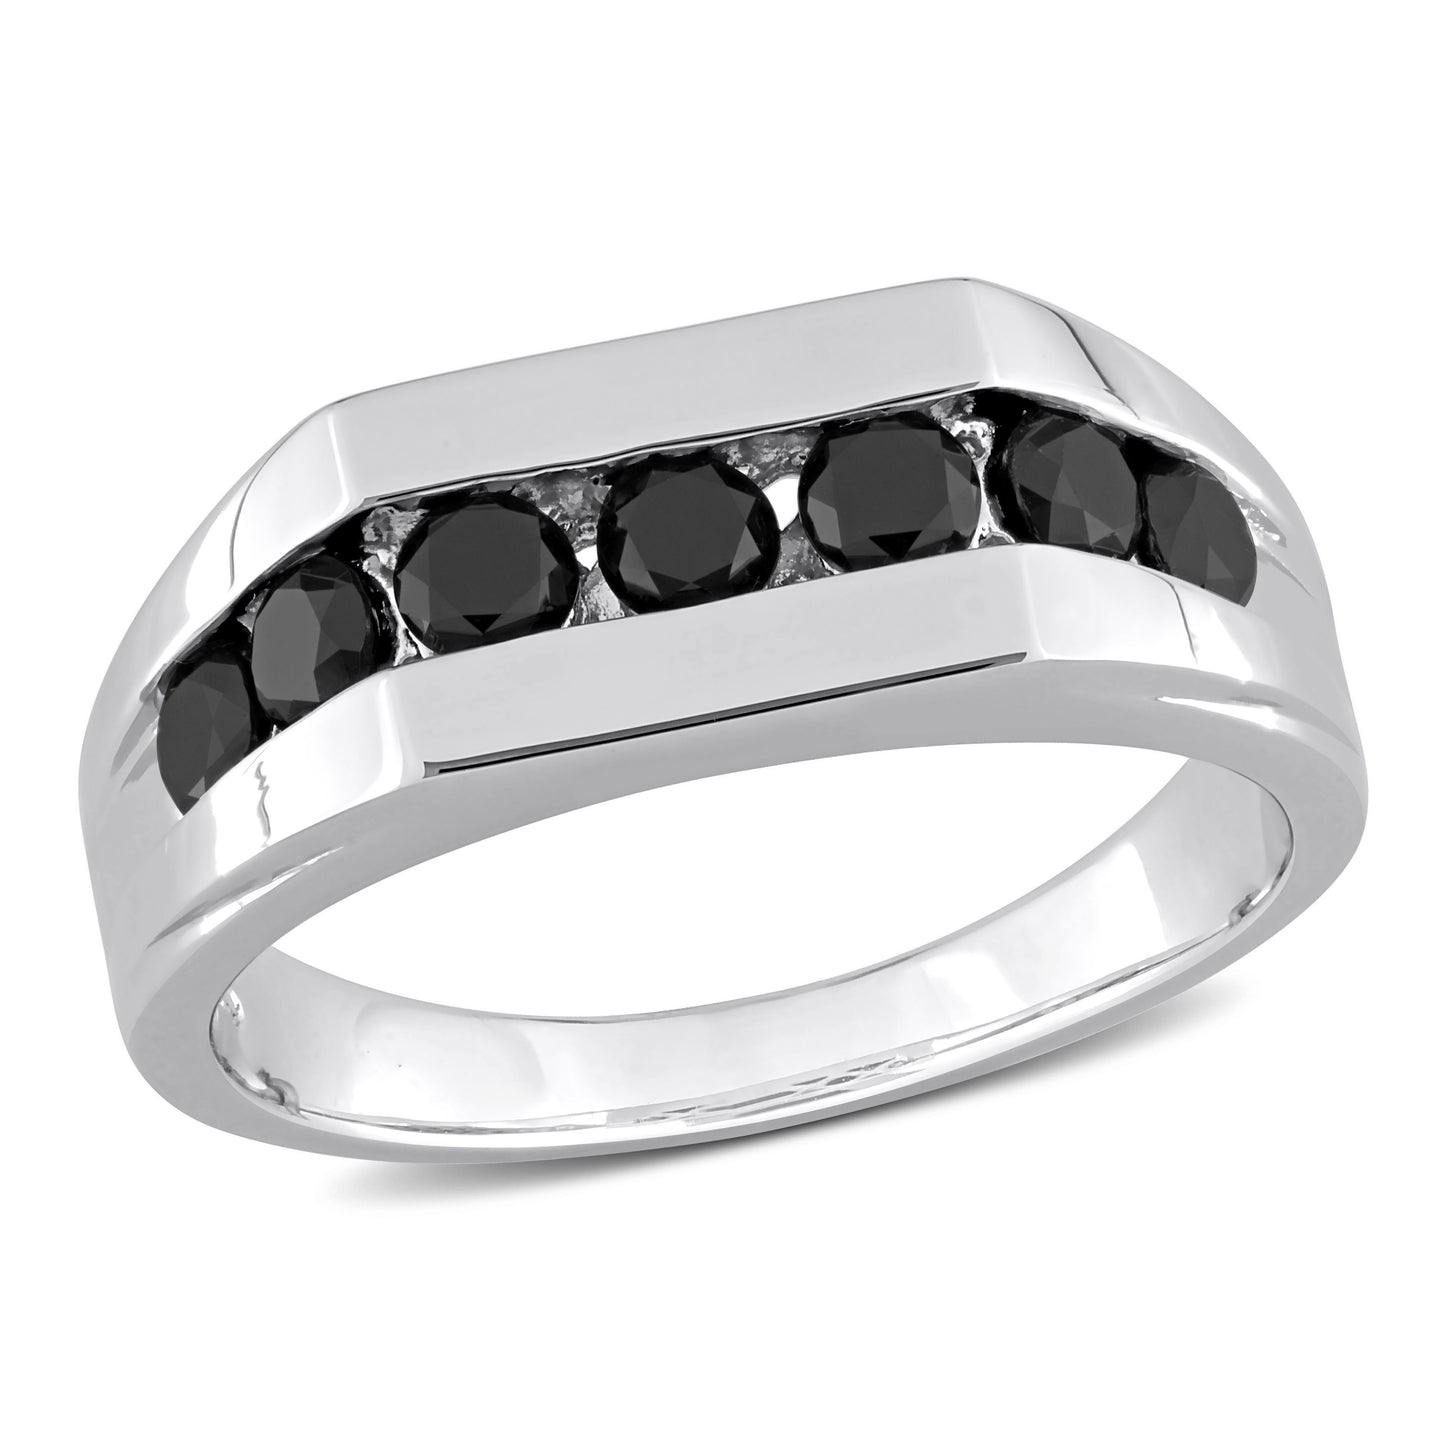 Black Diamond Channel Ring in Sterling Silver